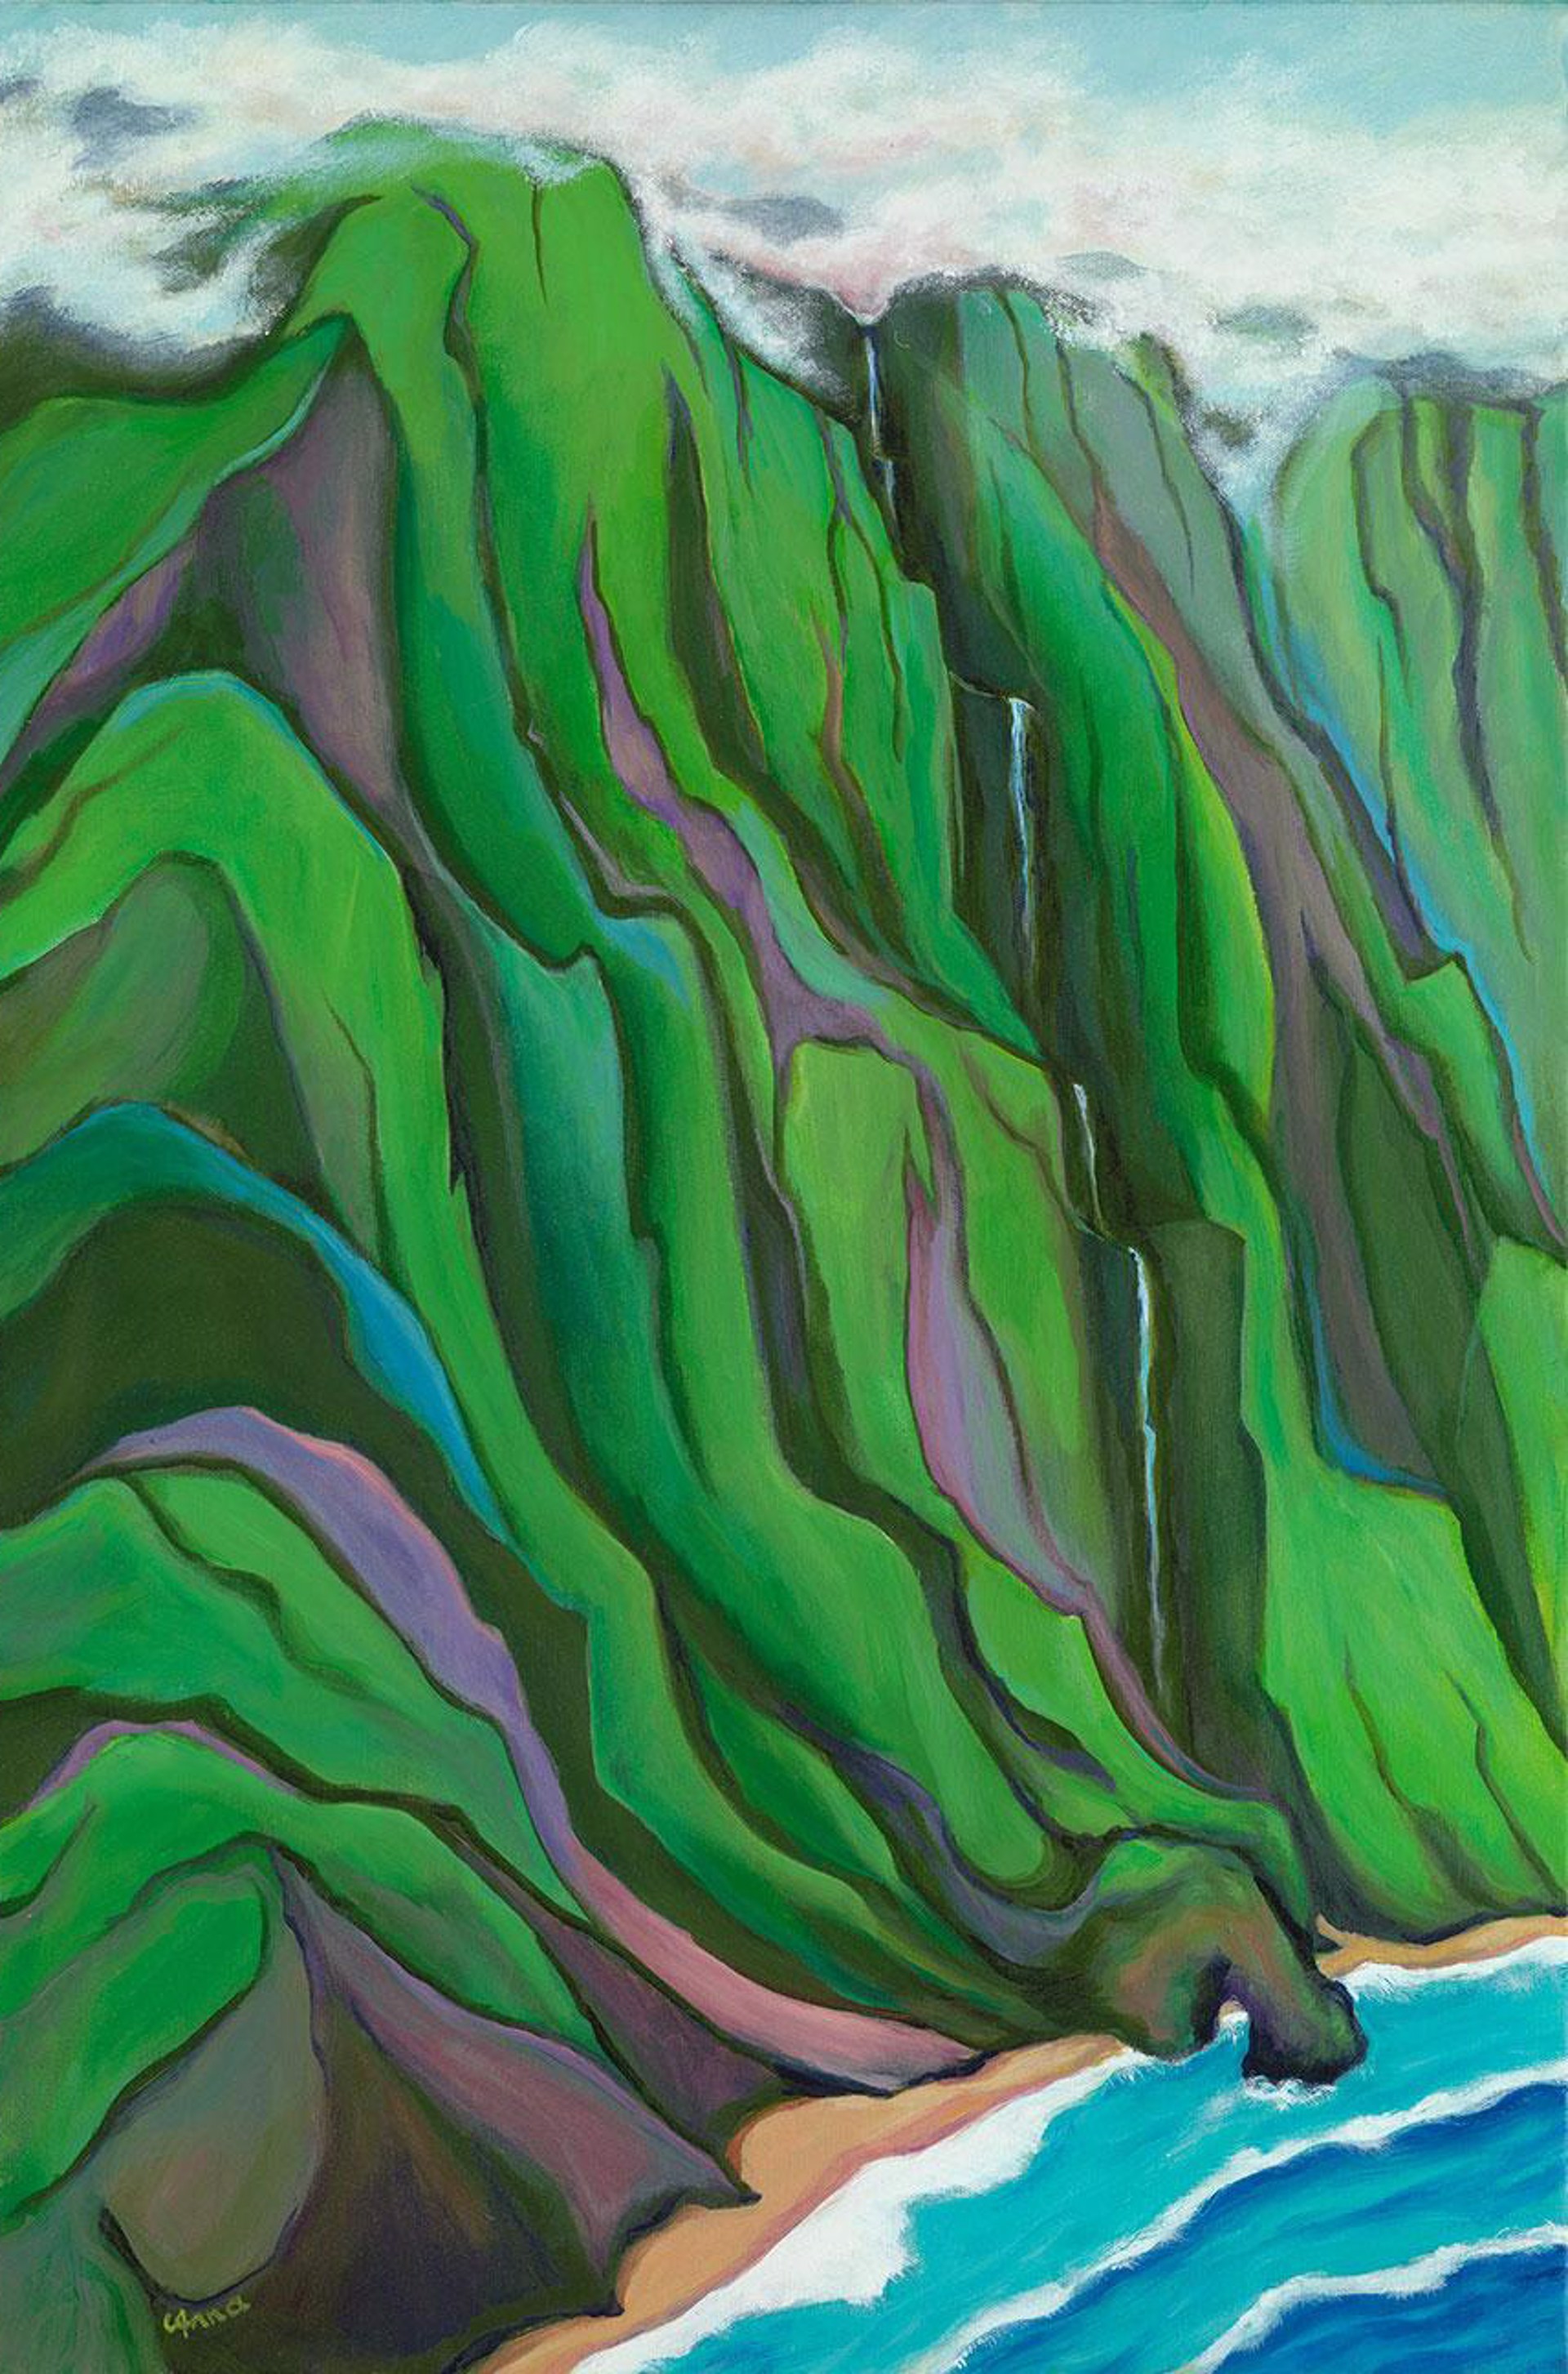 Pāpalaua Falls ( part 1 of triptych) by Anna Fuernsteiner